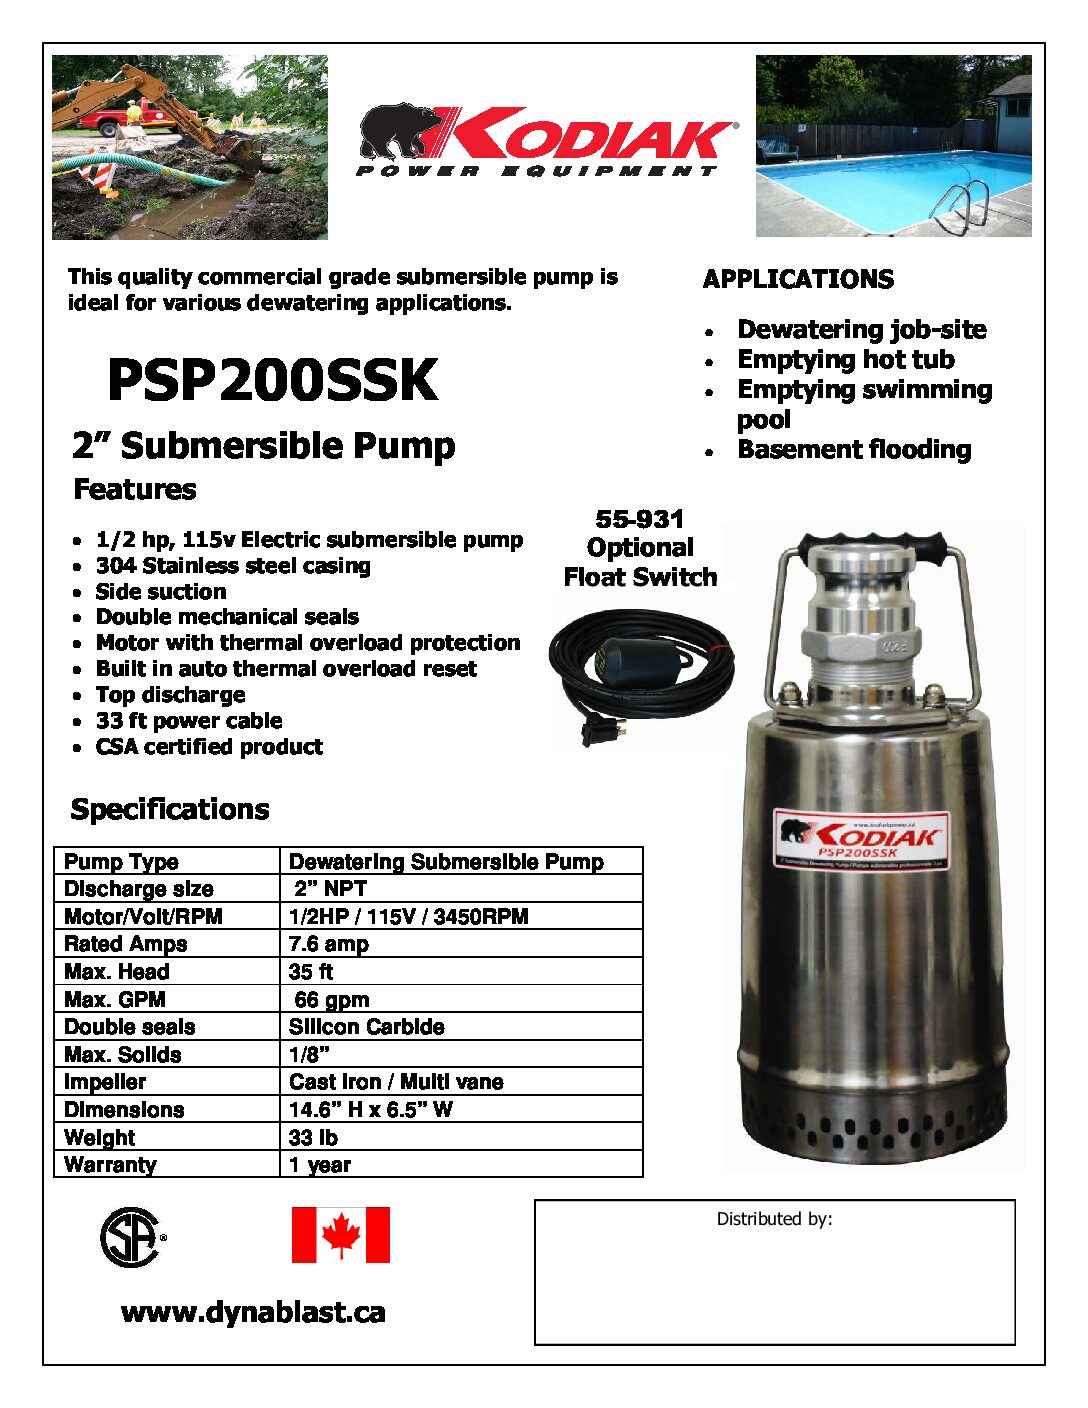 Kodiak PSP200SSK Submersible Pump